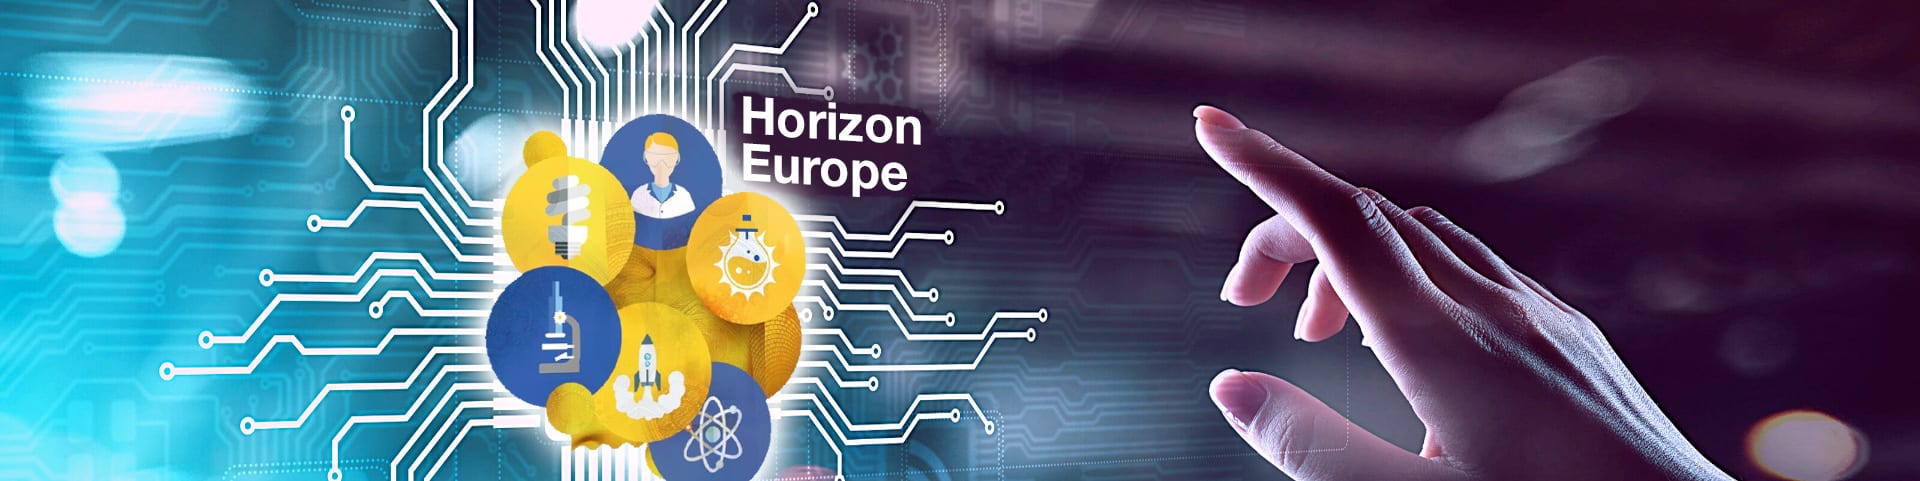 Horizon Europeno alt text set su stradedeuropa.eu